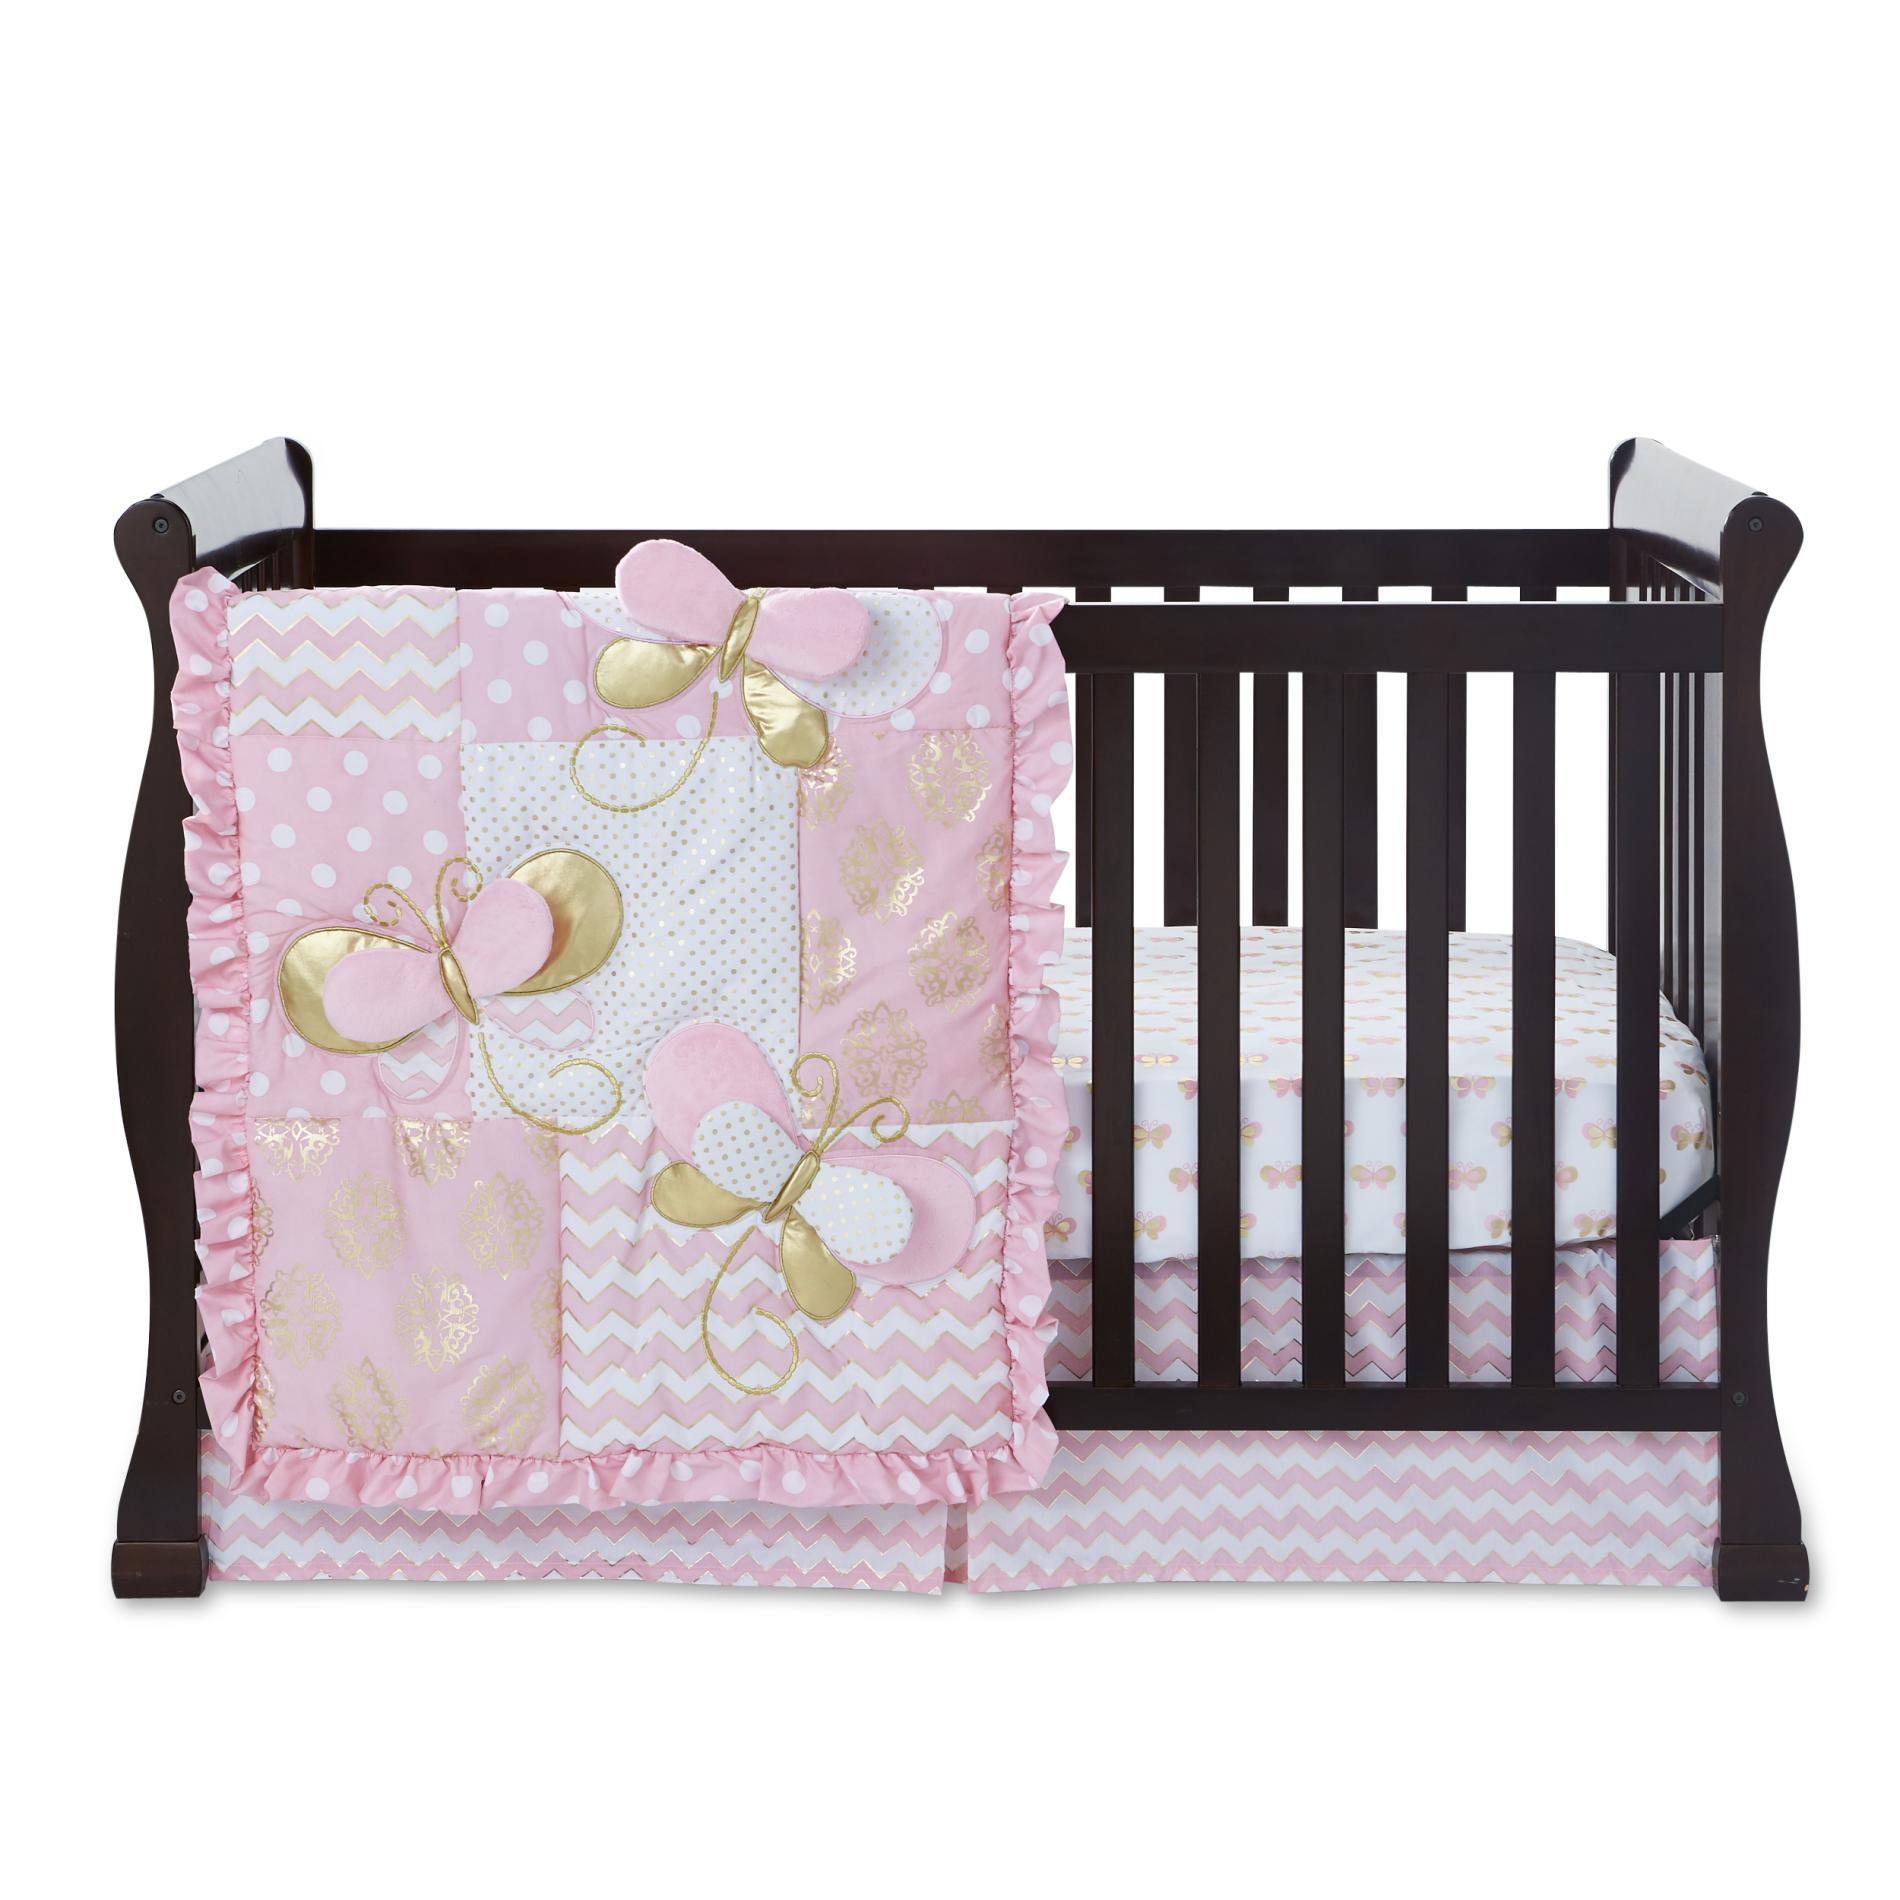 Crib Bedding Sets - Sears